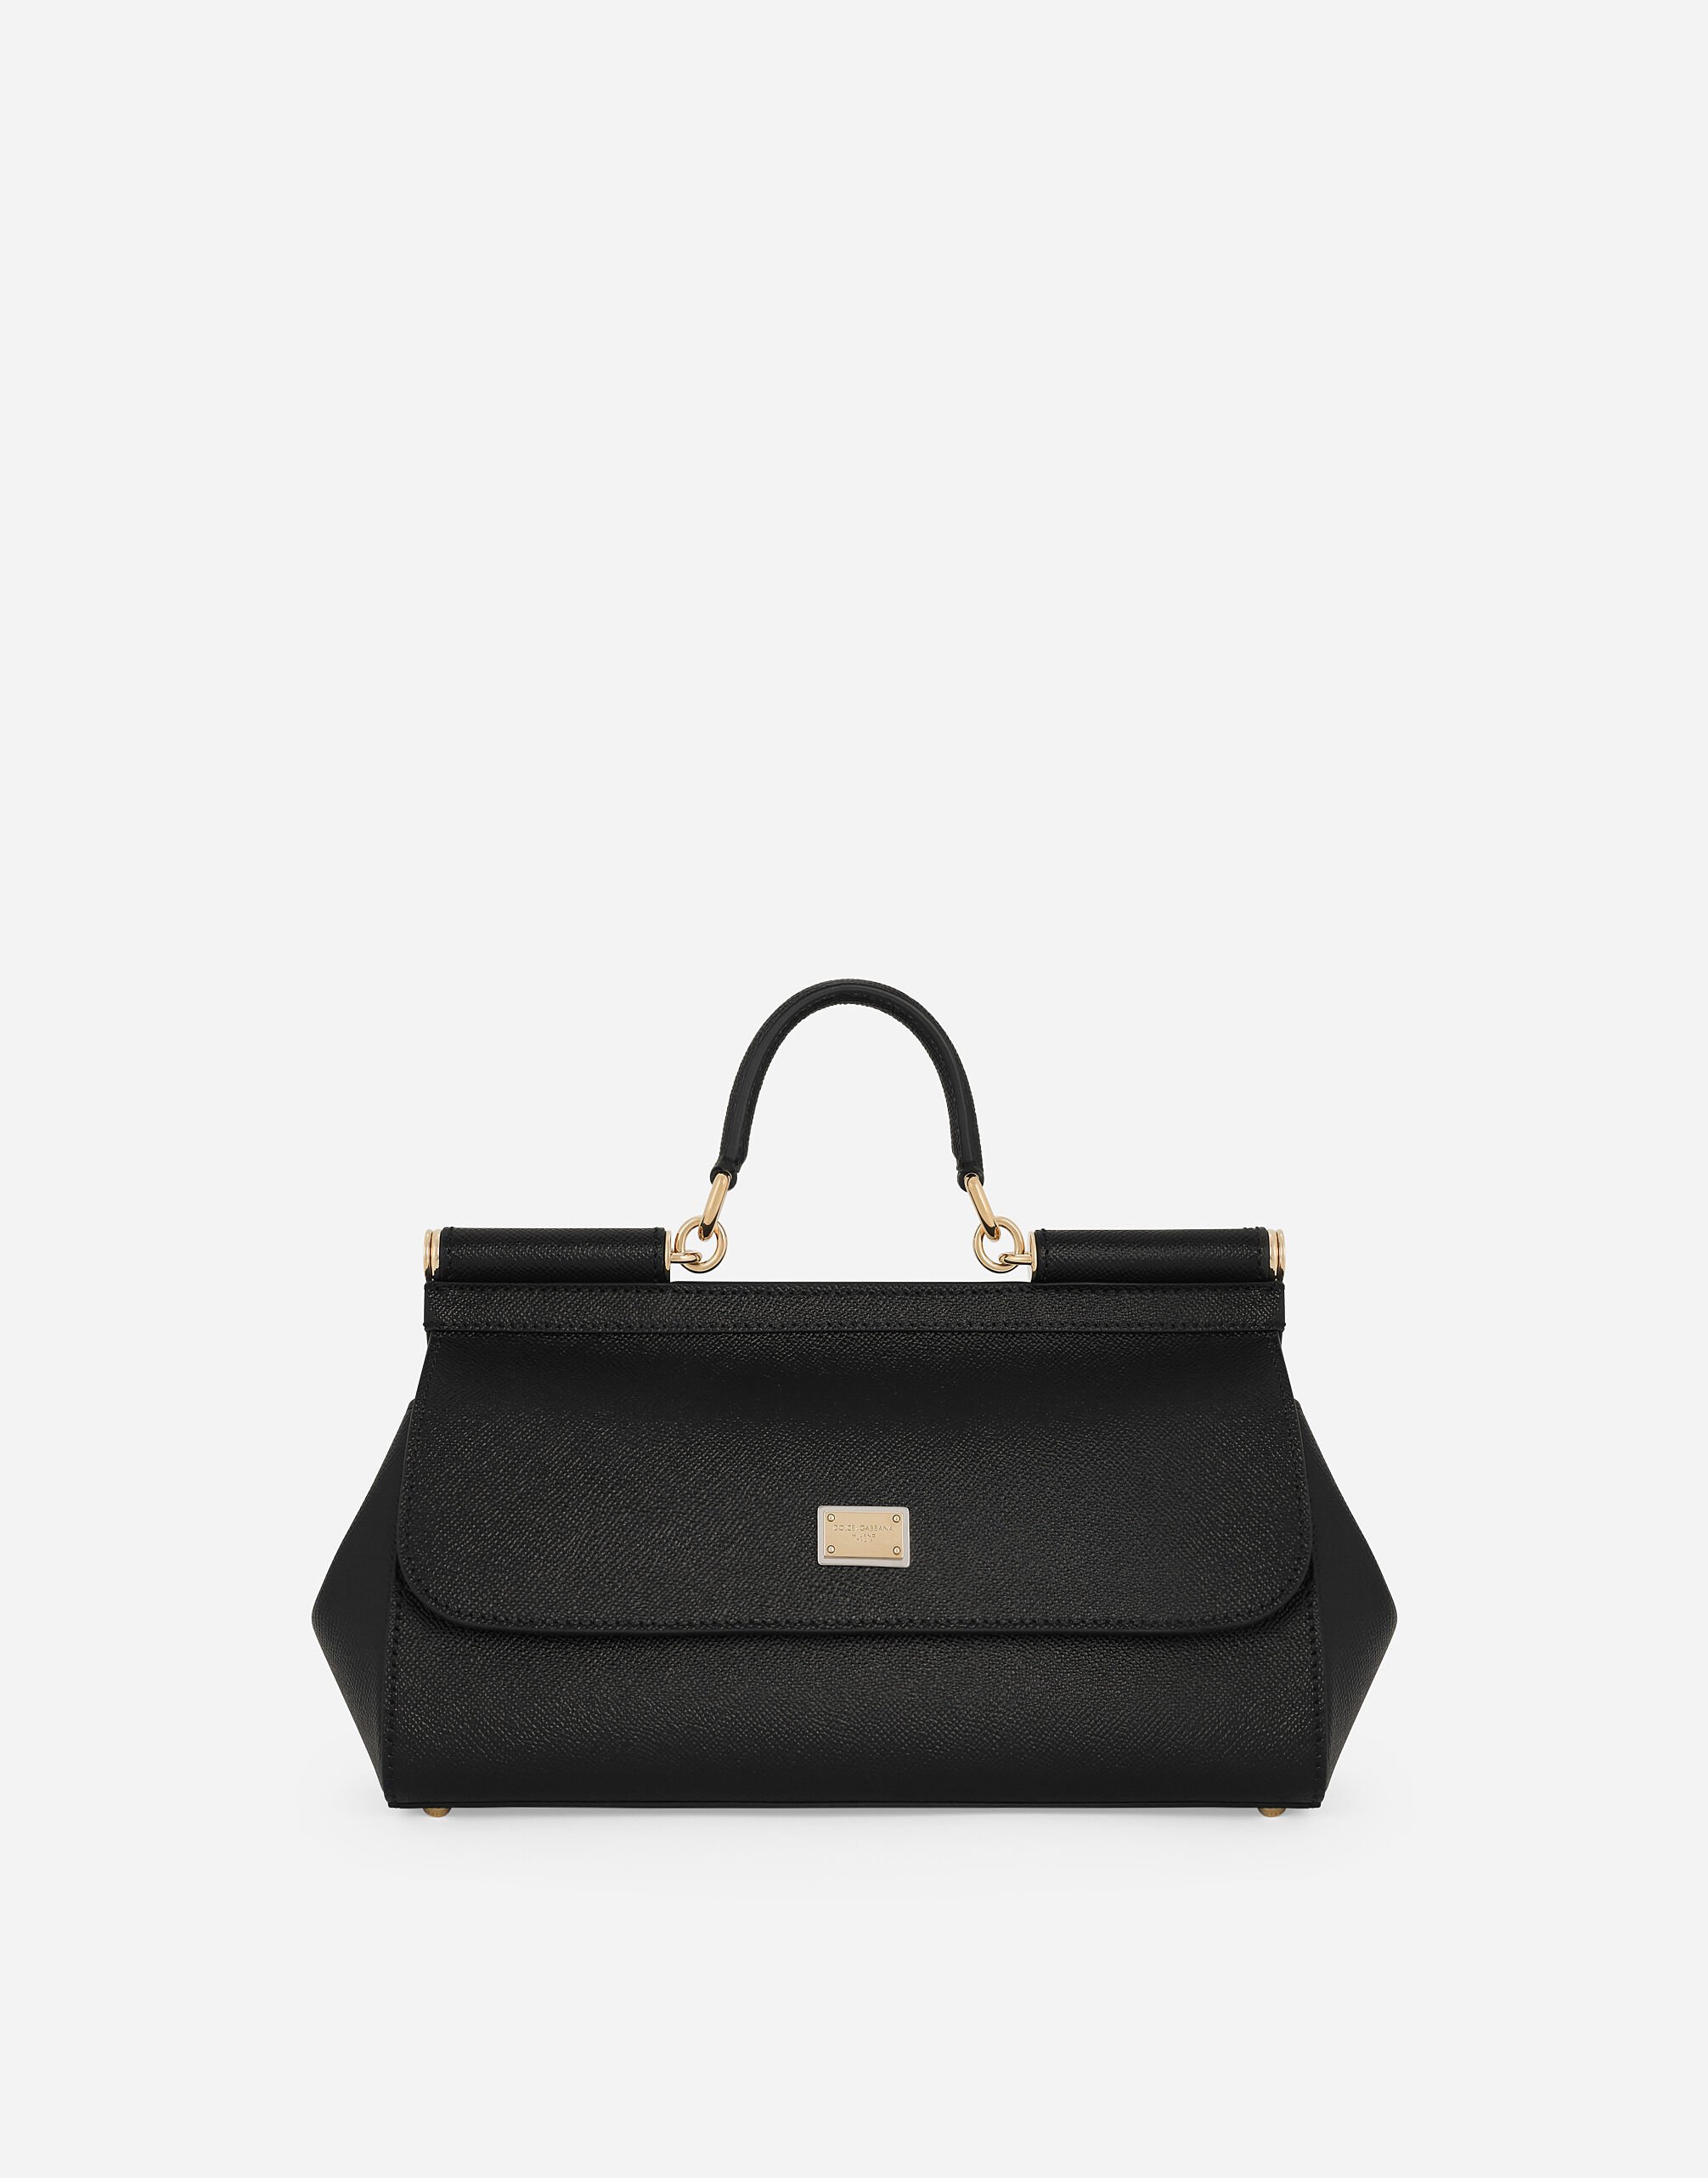 Dolce & Gabbana Elongated Sicily handbag Black VG440FVP18G